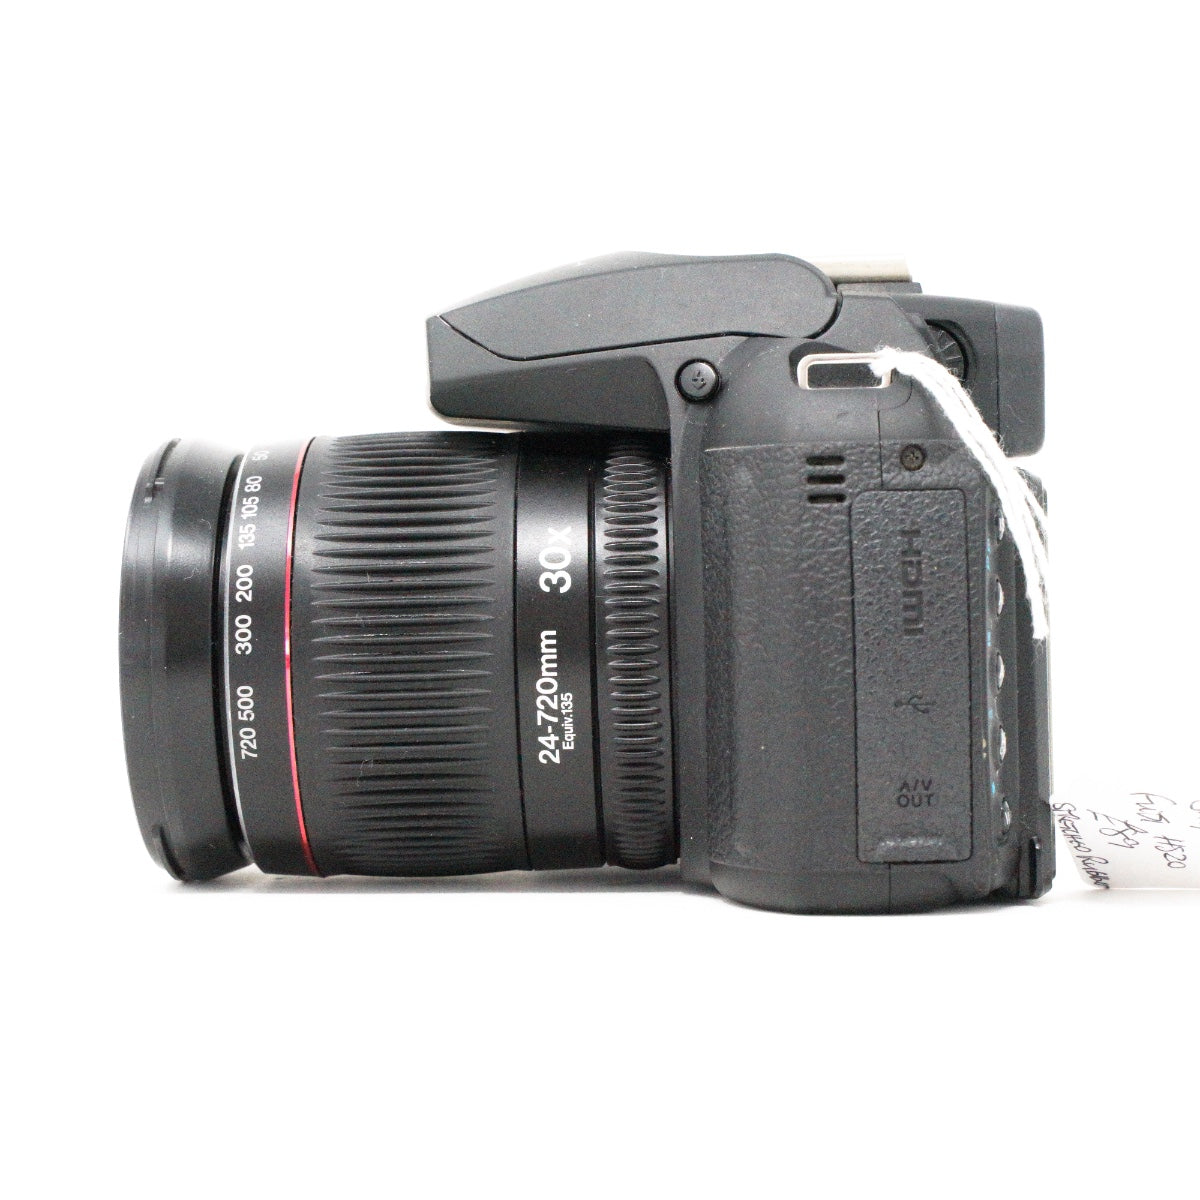 Used Fuji Finepix HS20 EXR Digital Bridge camera